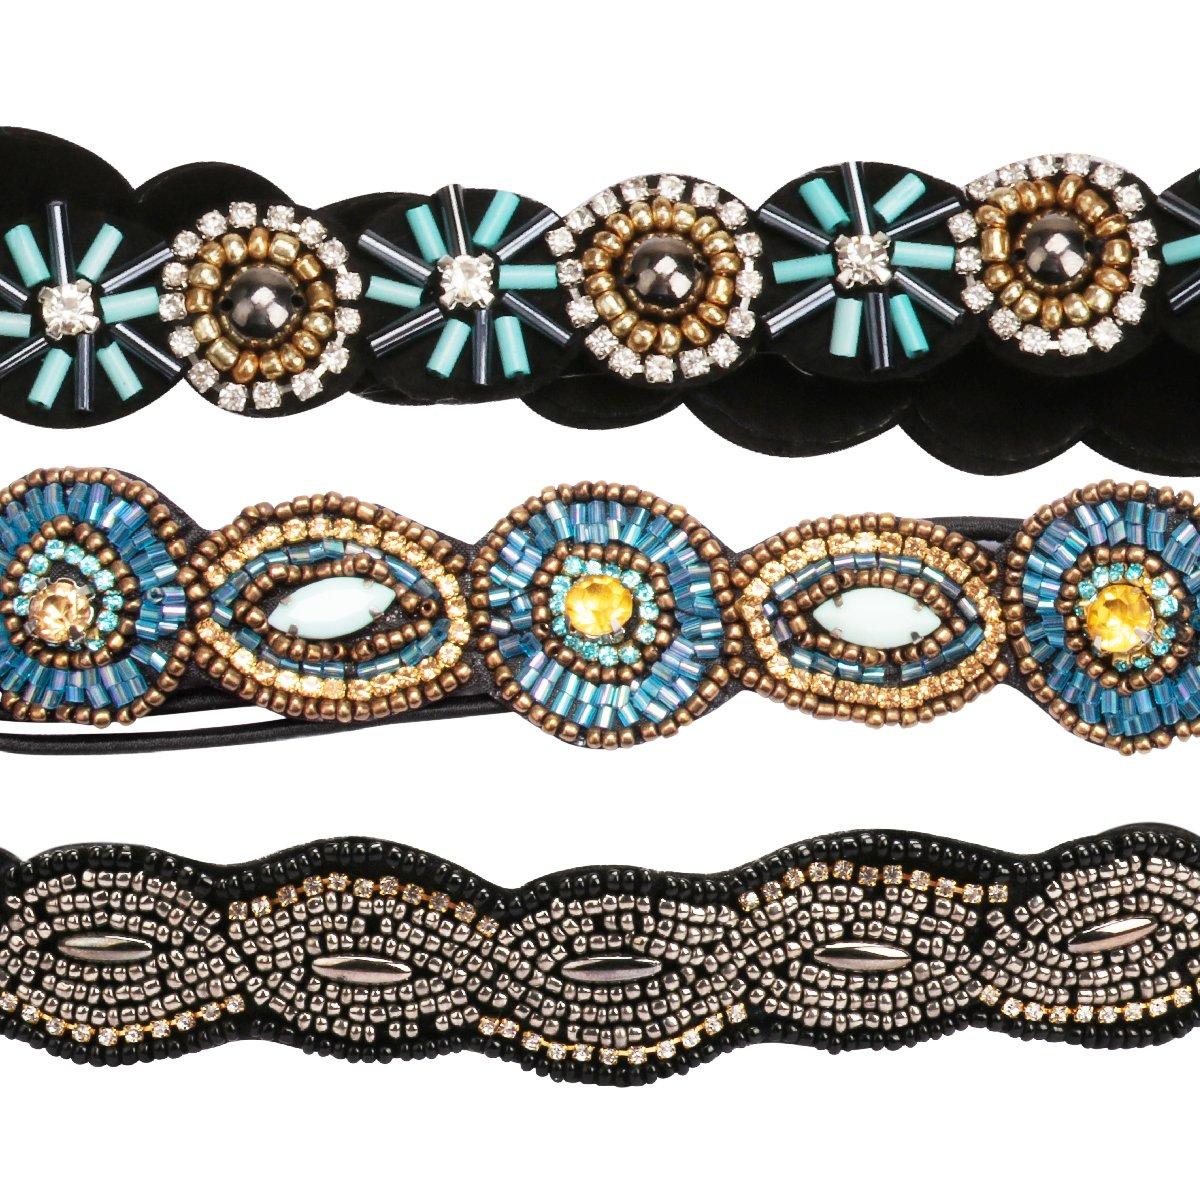 MTLEE 6 Pieces Beaded Headbands Sparkly Crystal Spain